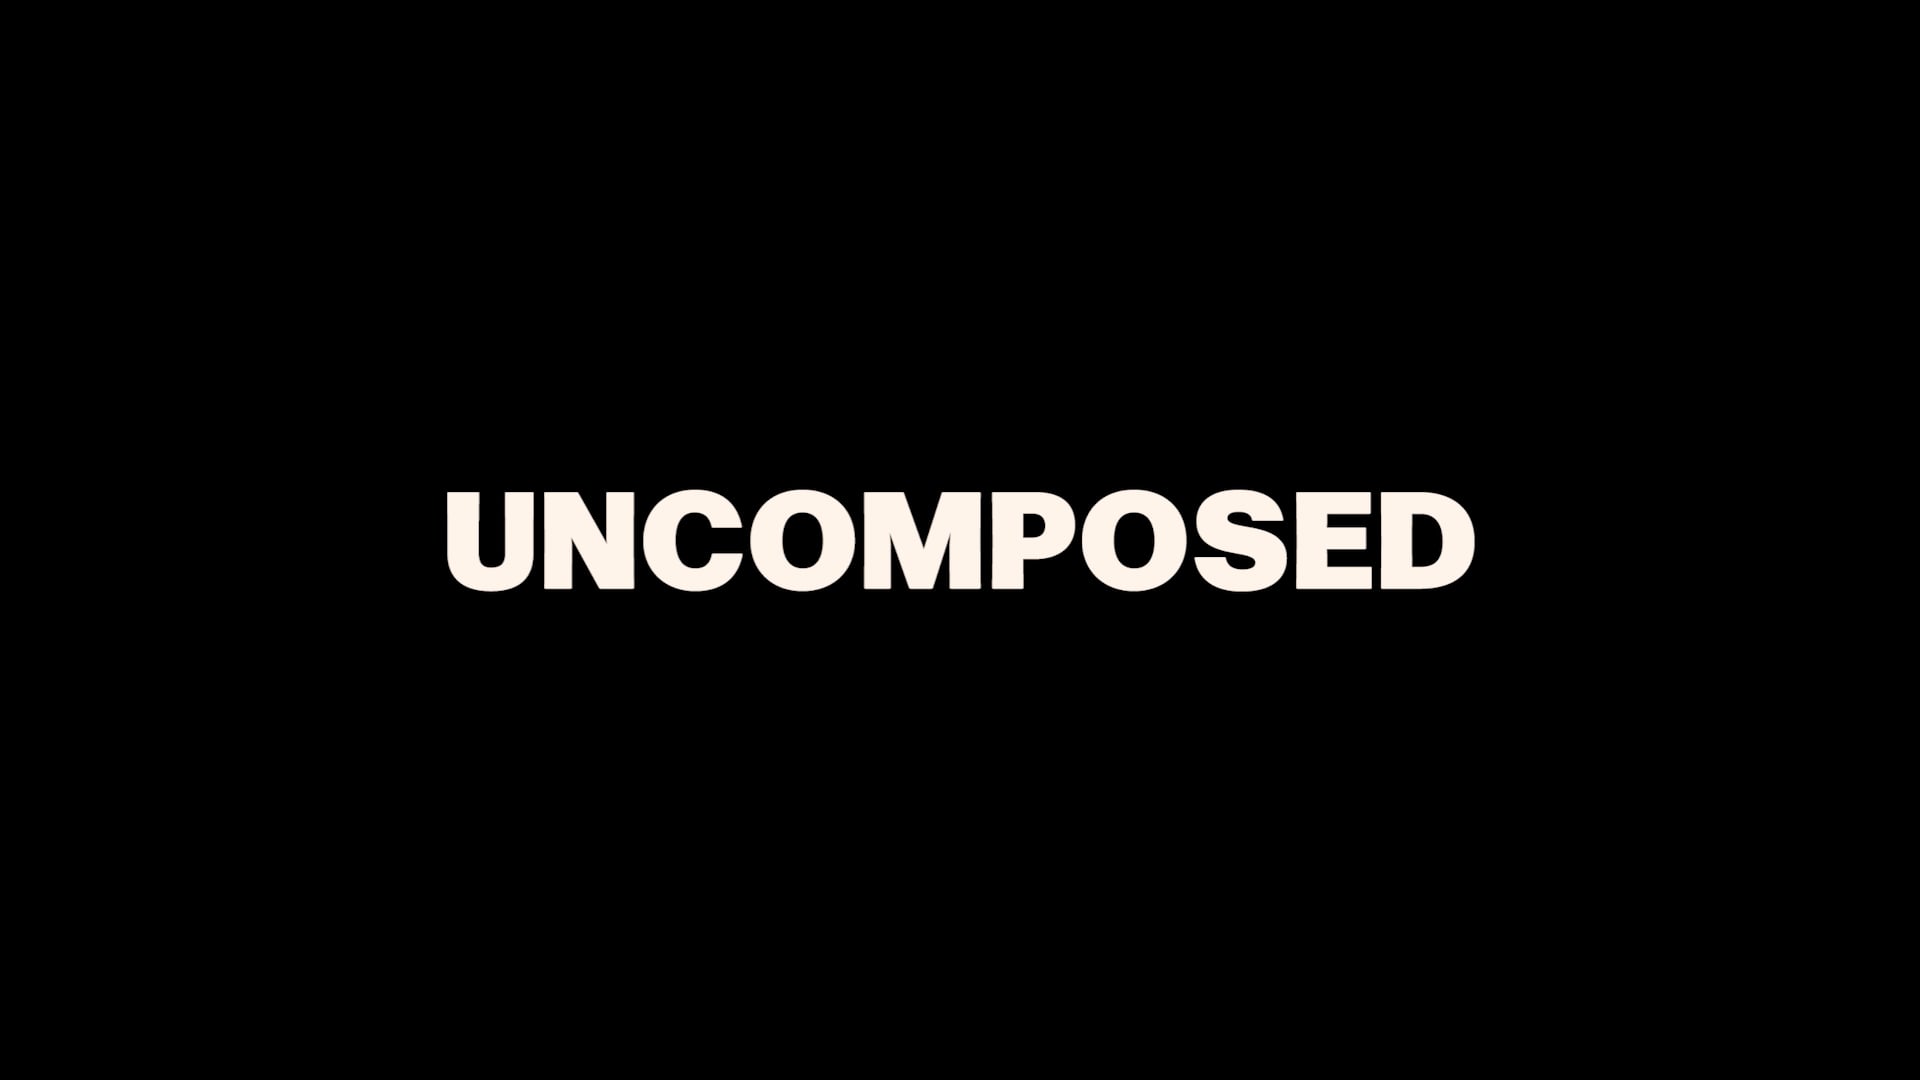 Uncomposed